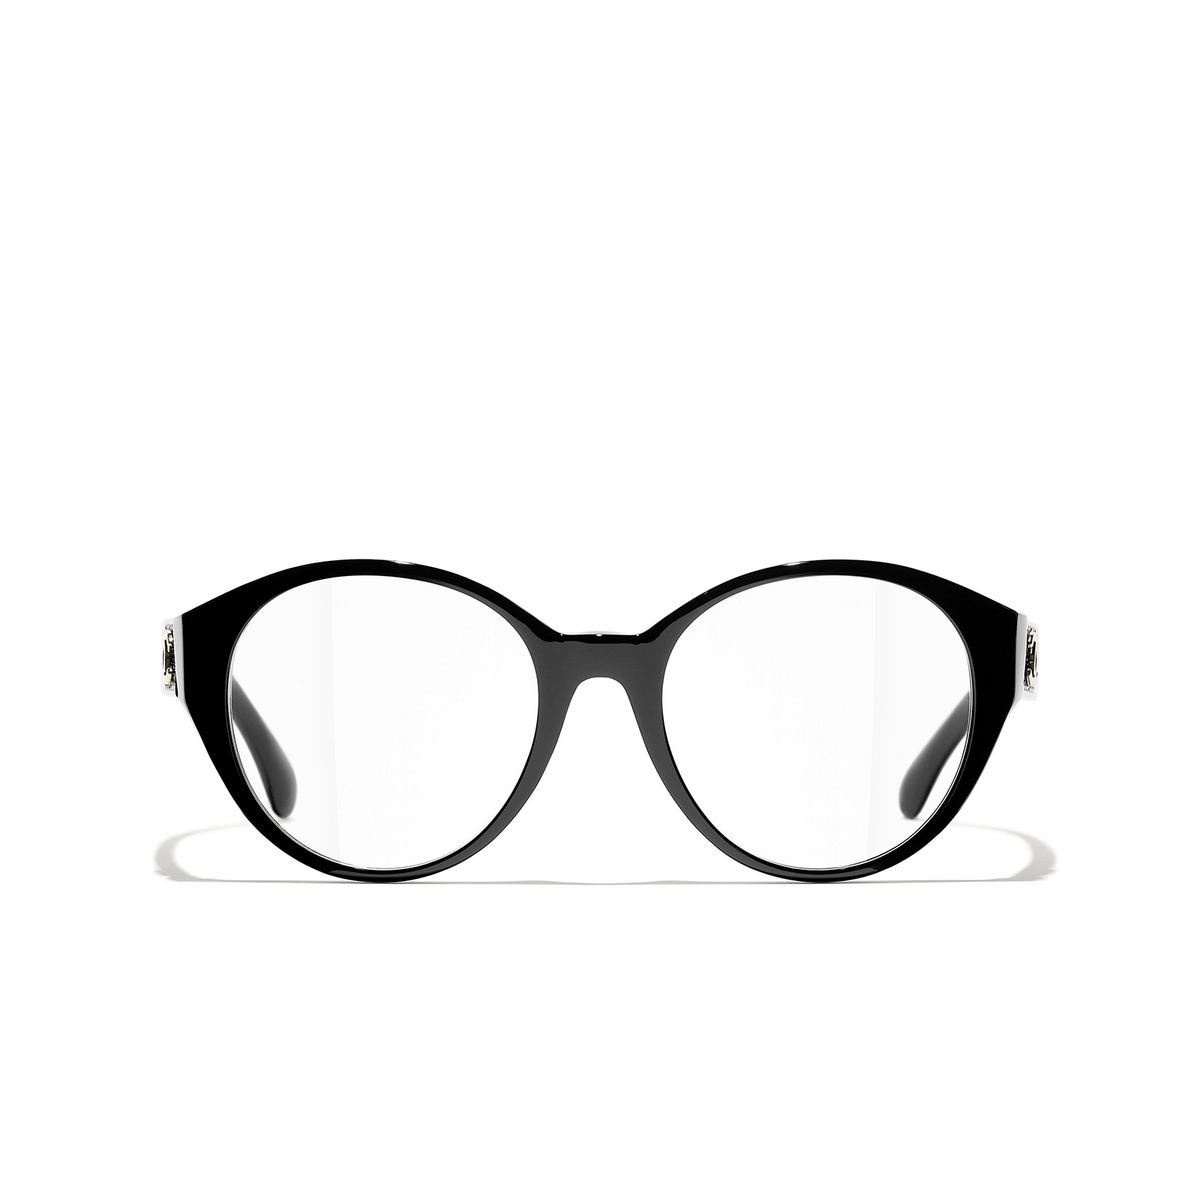 CHANEL round Eyeglasses C622 Black - front view